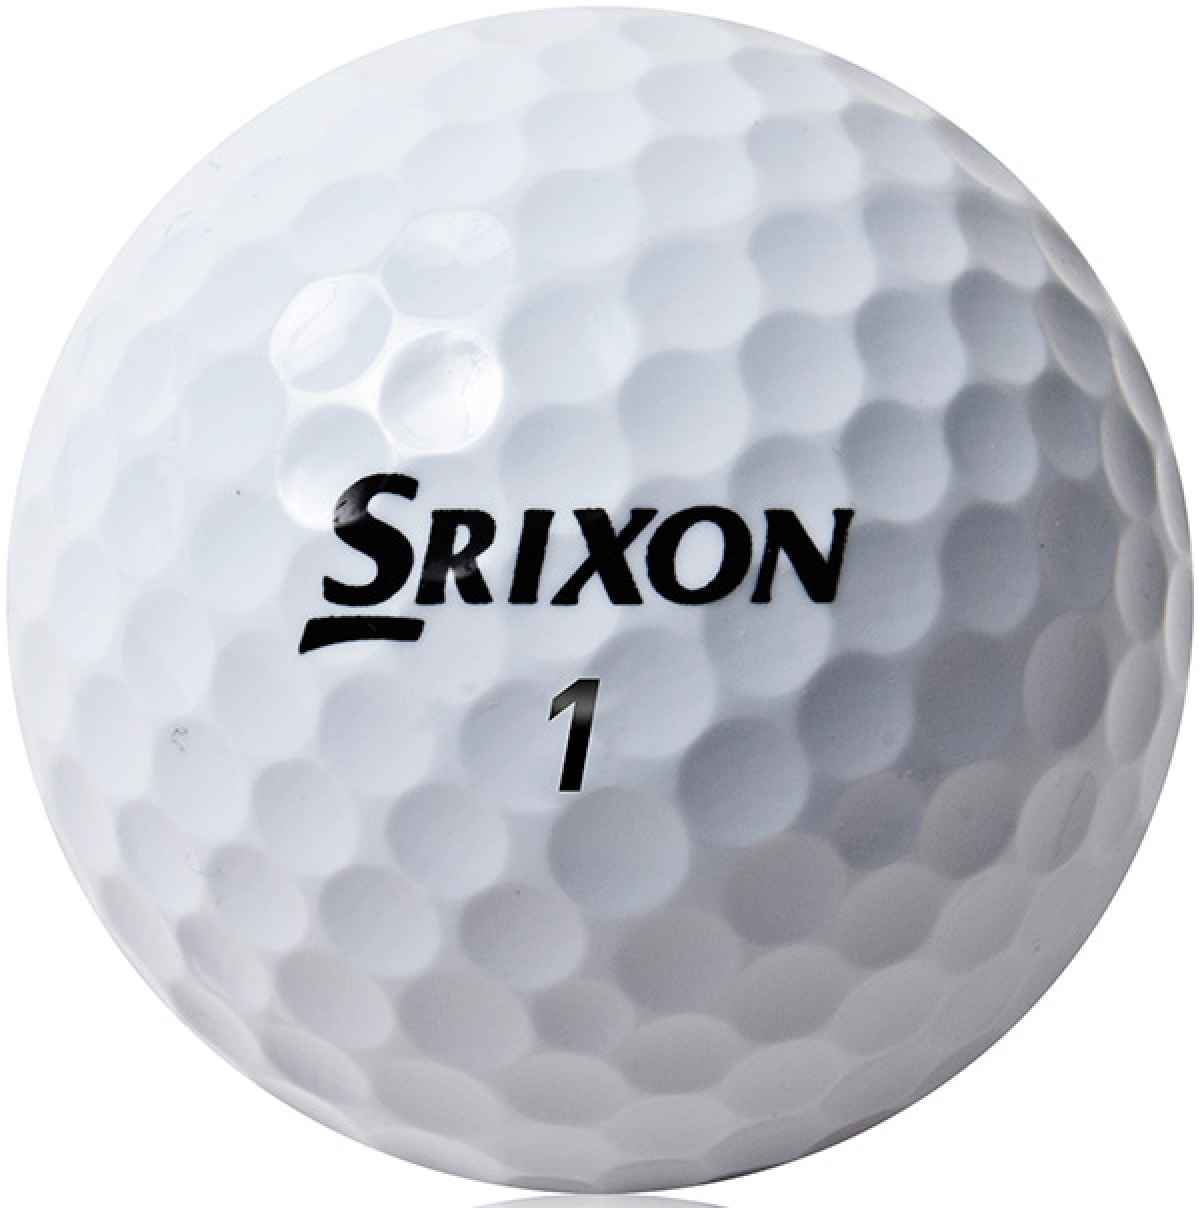 Srixon AD333 Tour | Balls Reviews | GolfMagic